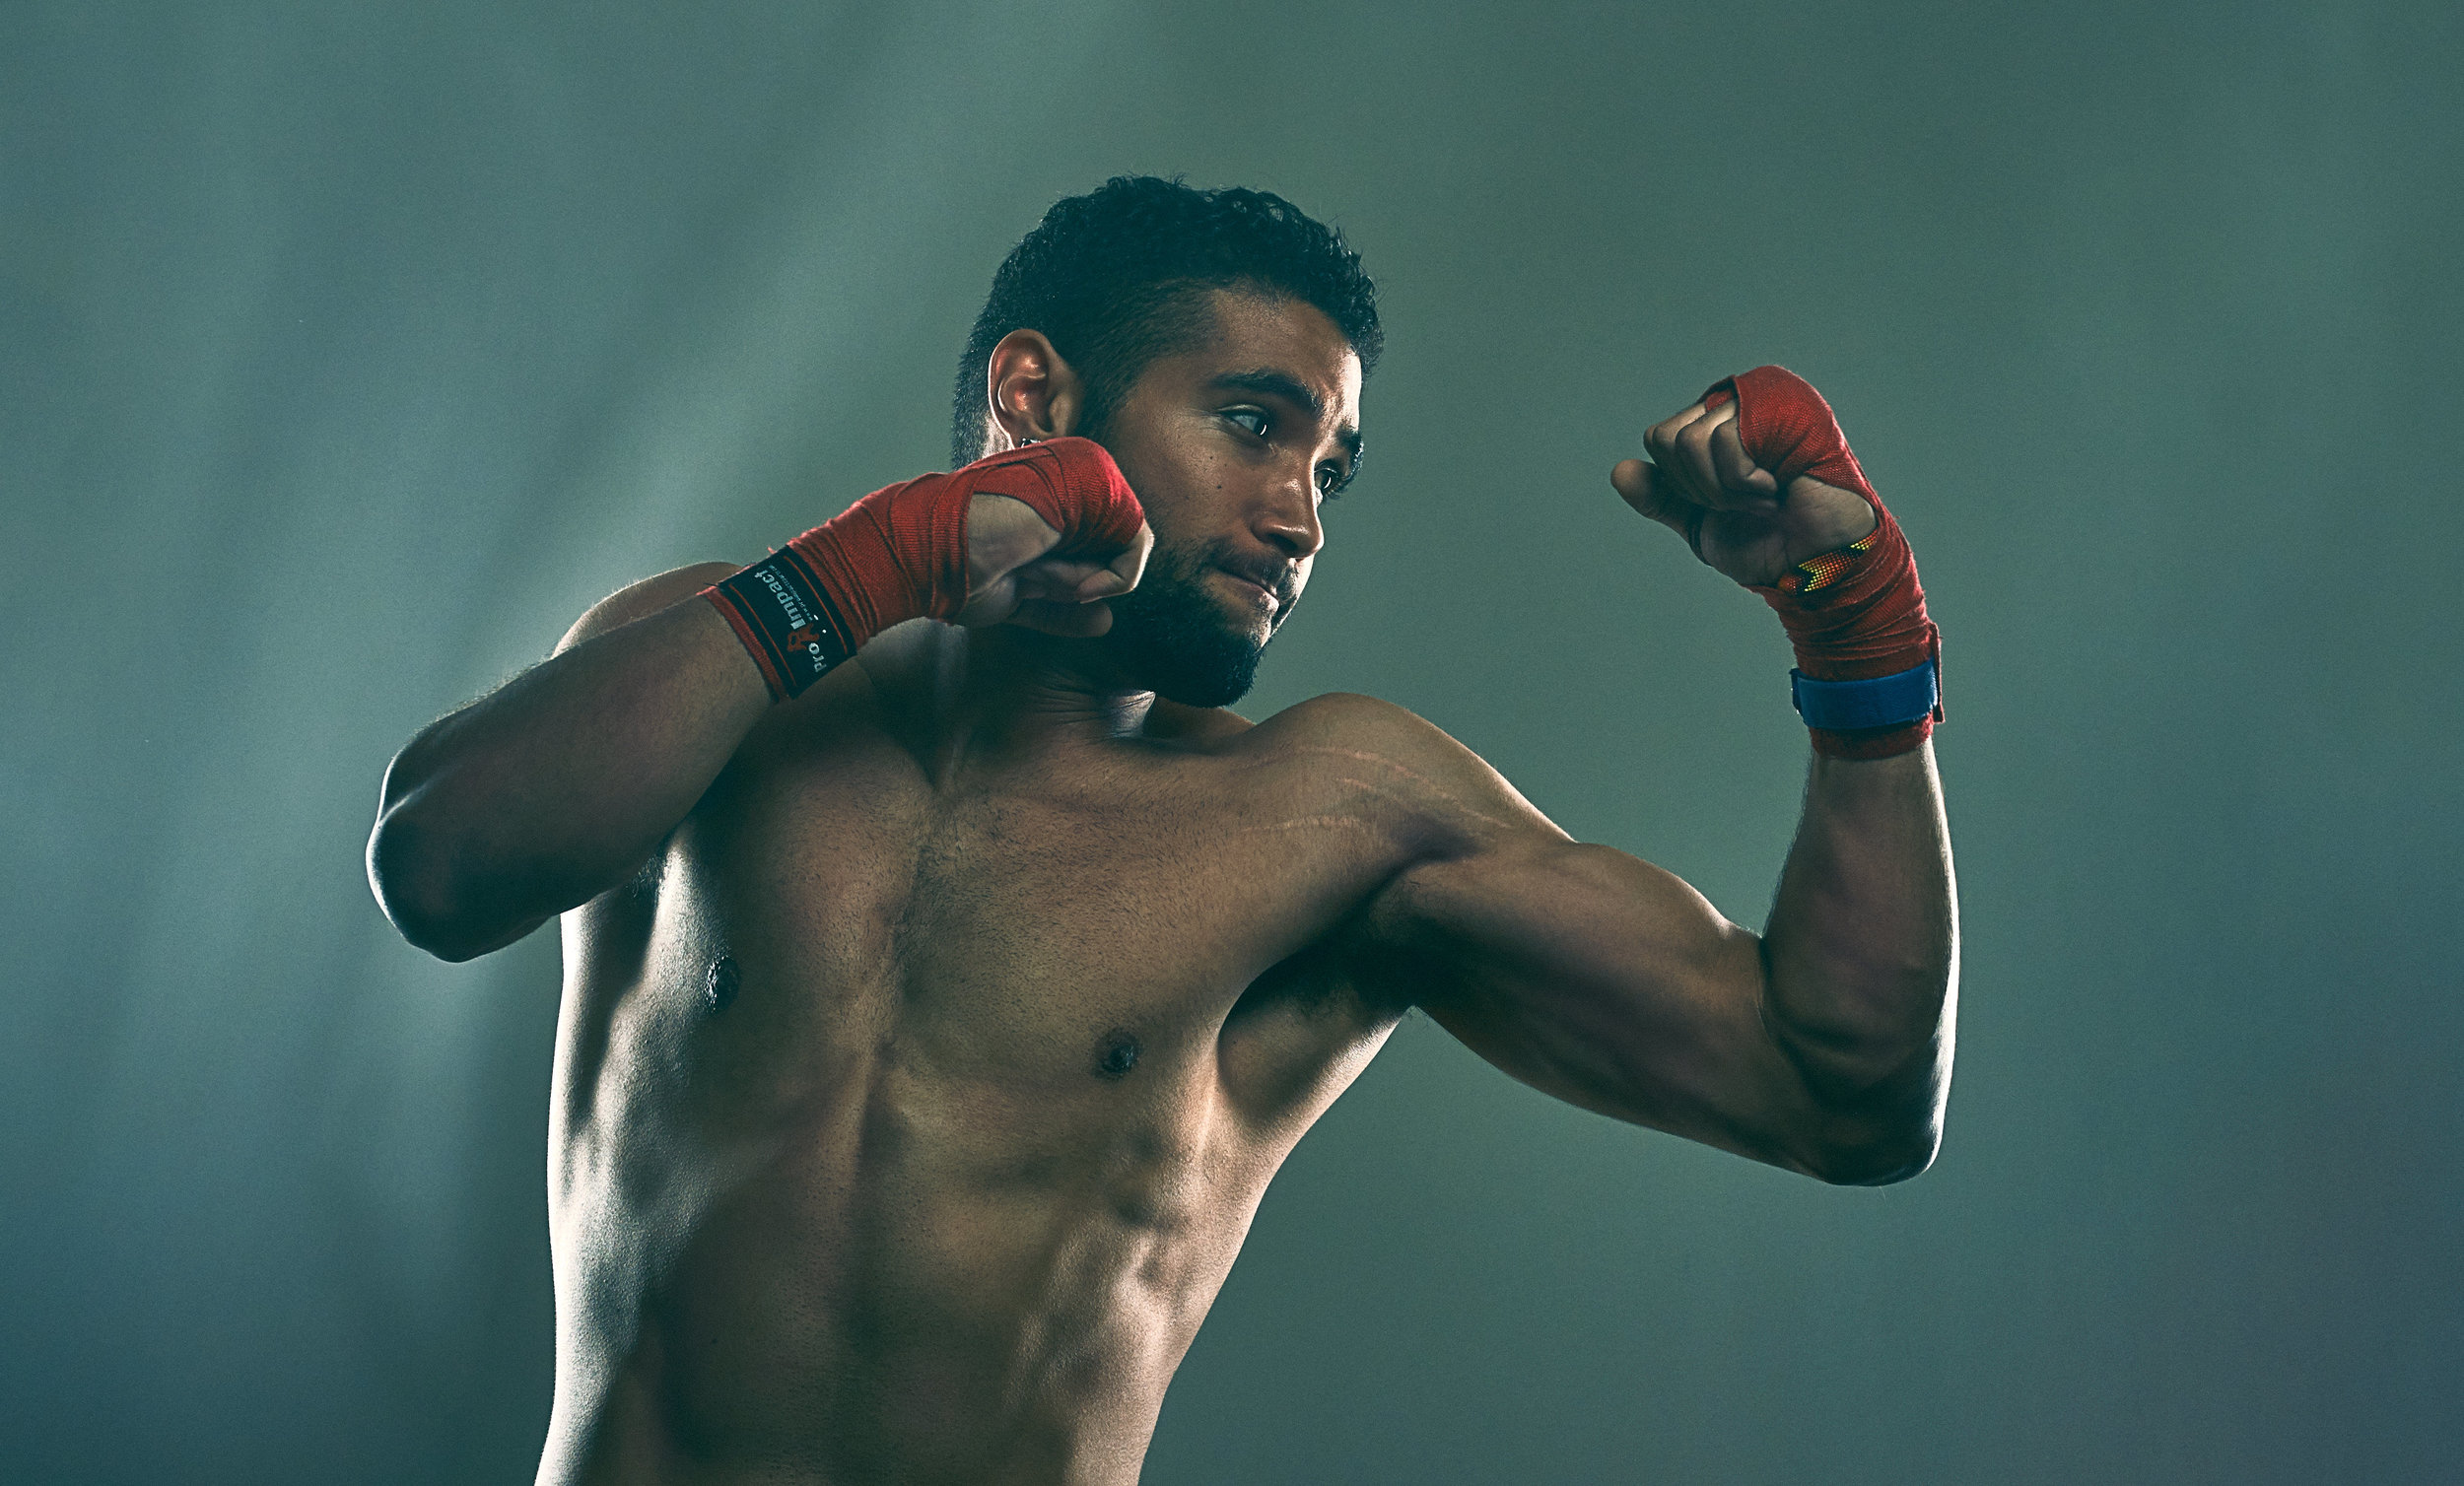 MMA fighter Jordan Cacioppo